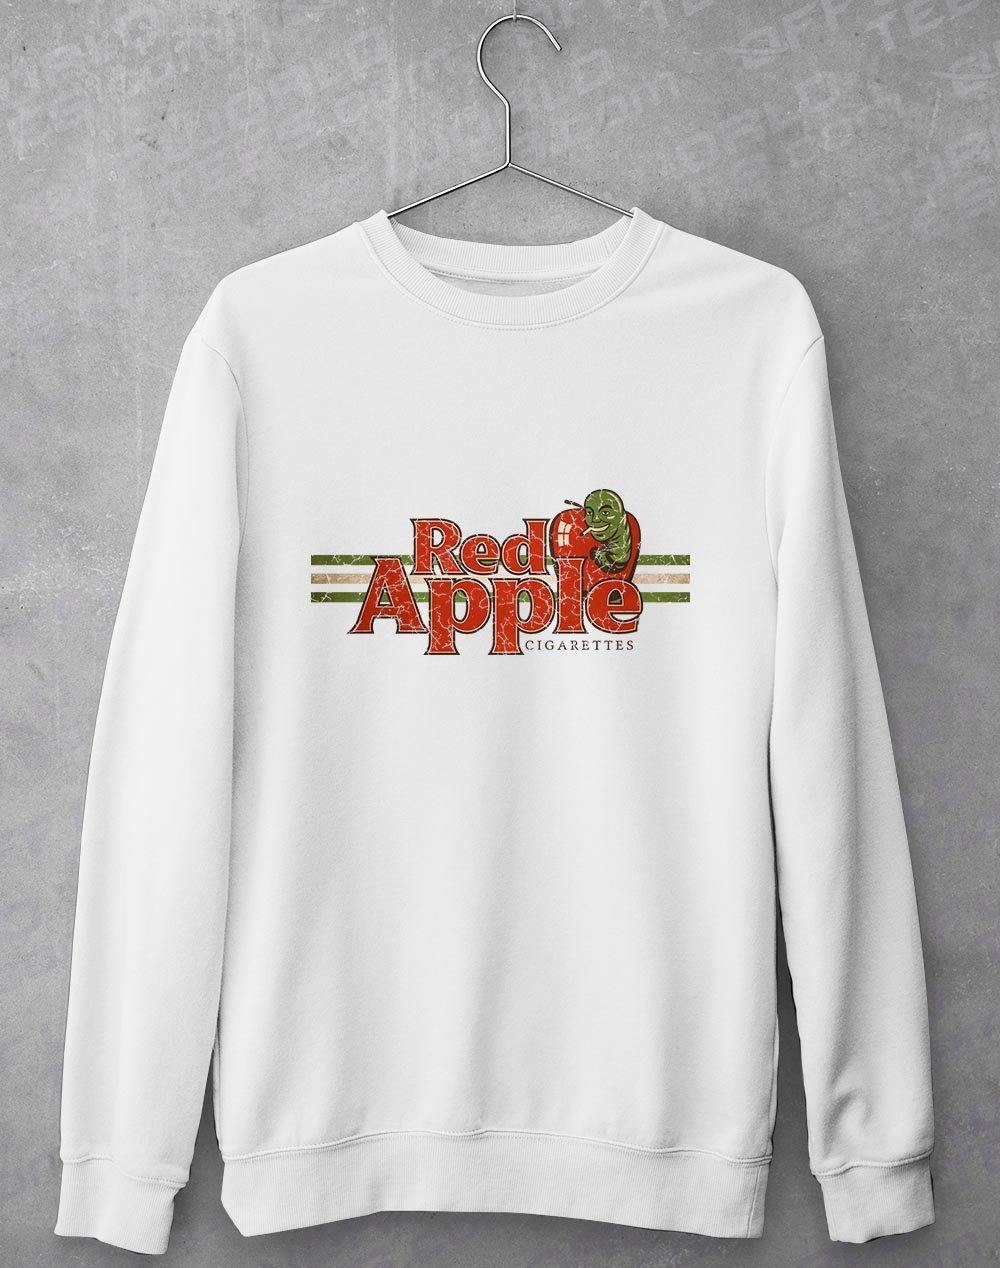 Red Apple Cigarettes Sweatshirt S / White  - Off World Tees